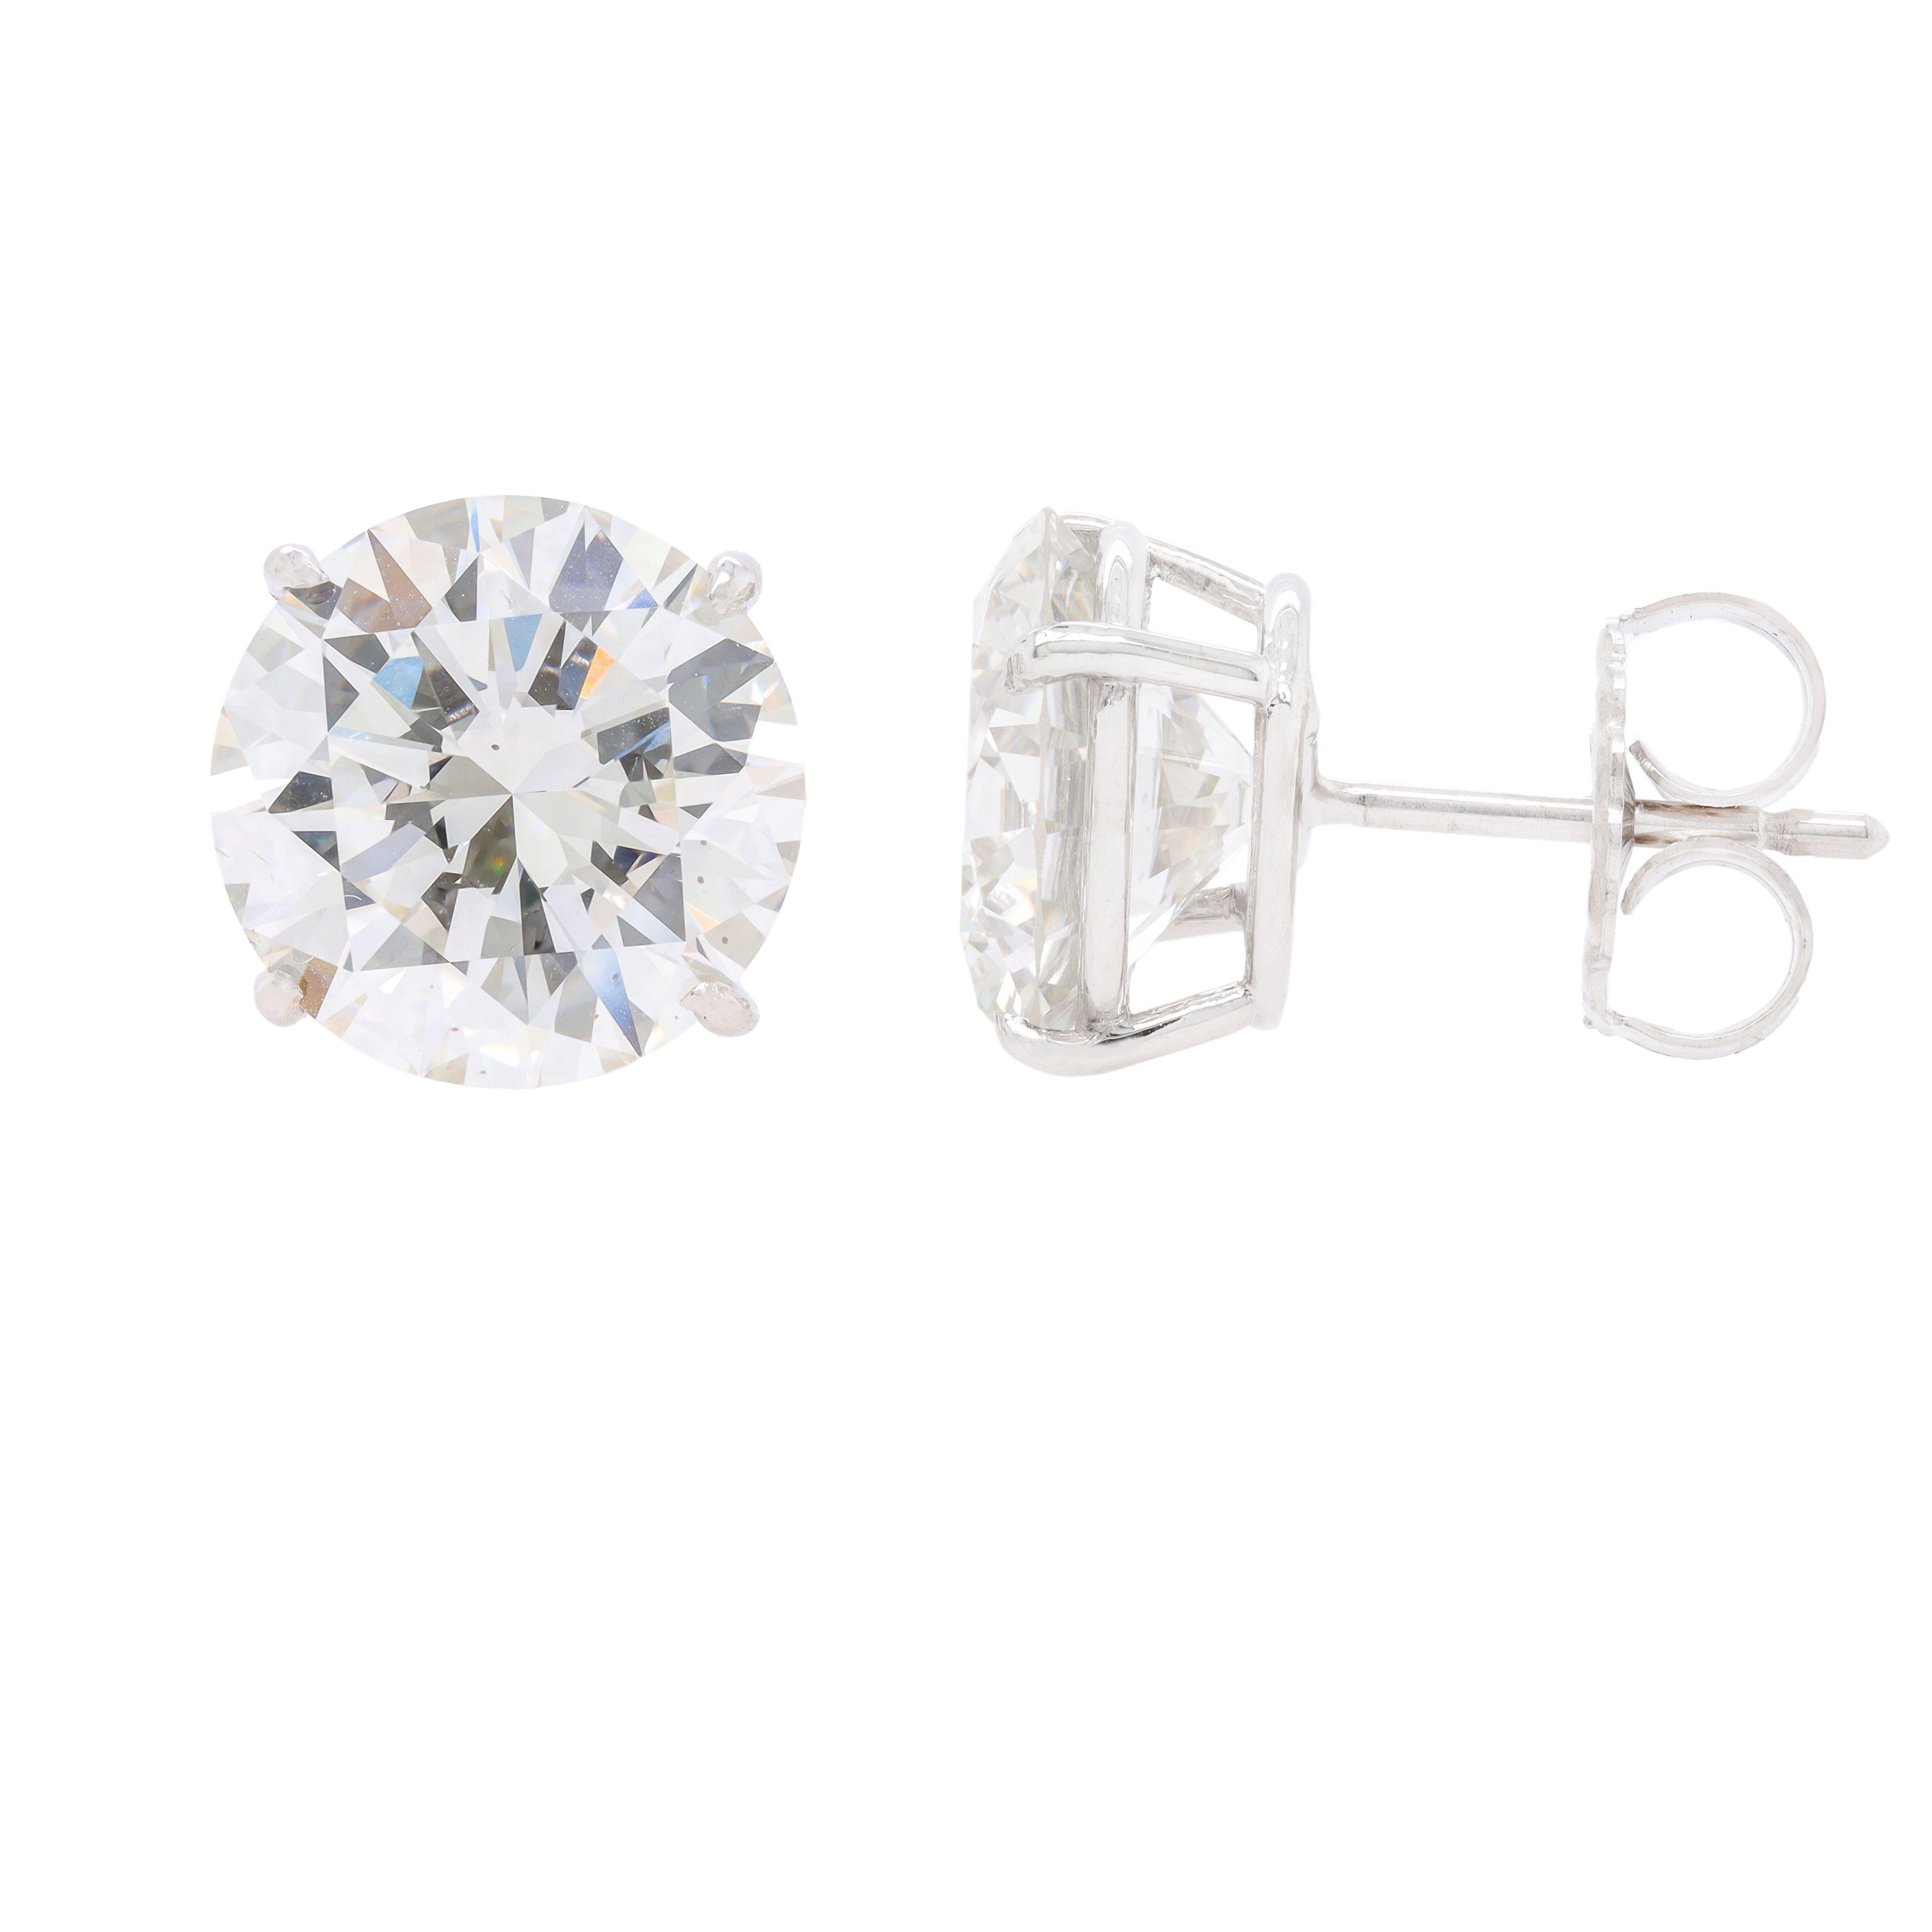 Round Cut GIA Certified 11.36 Carat Diamond Stud Earrings For Sale